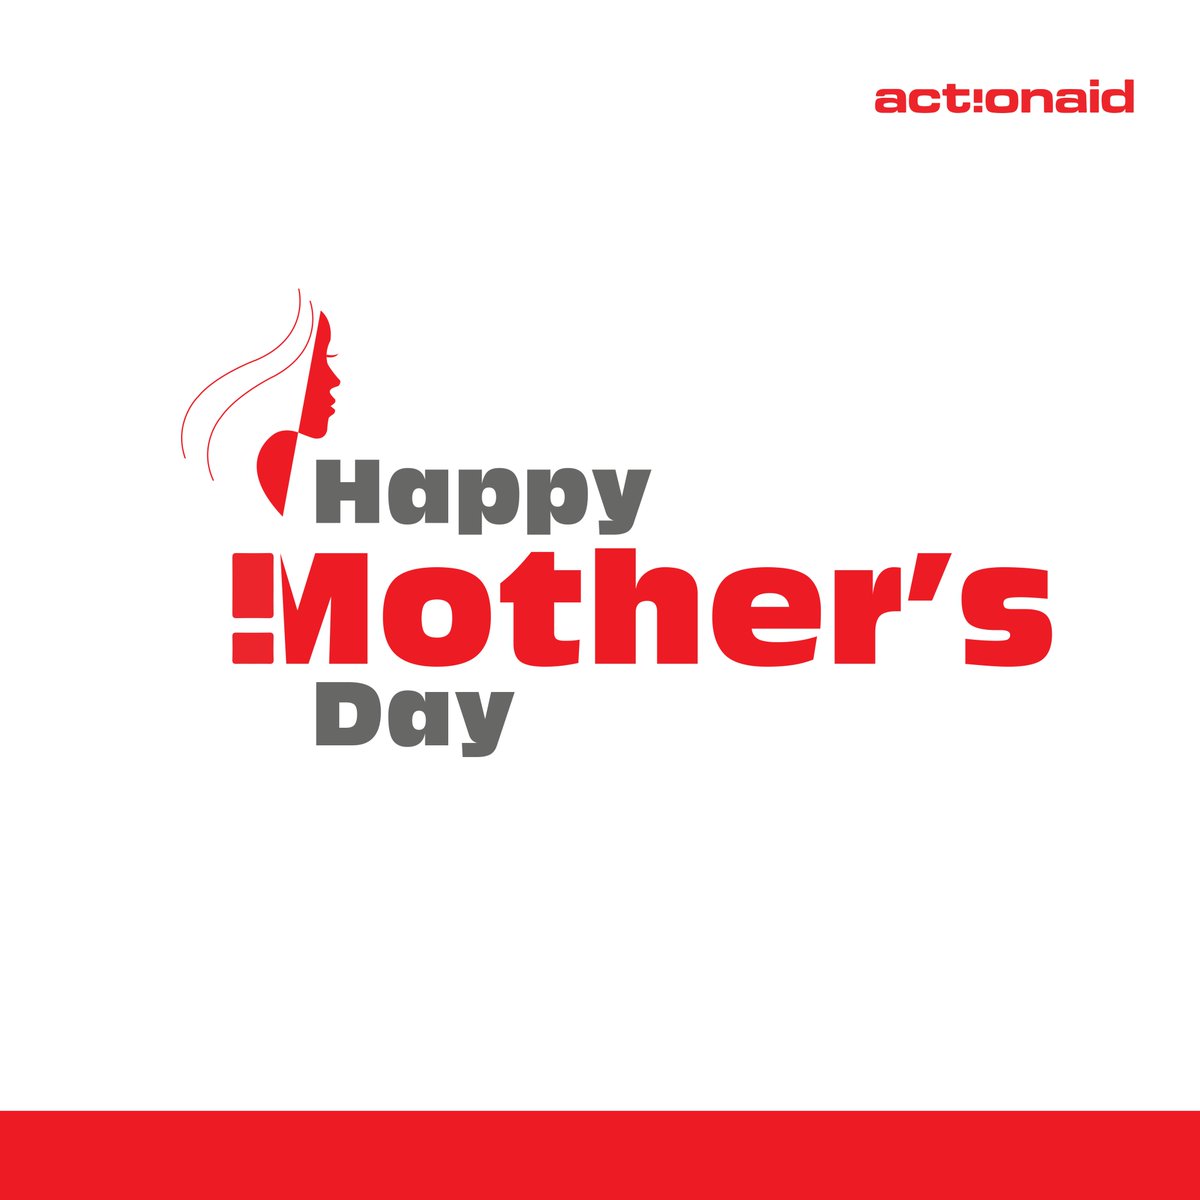 #mothersday